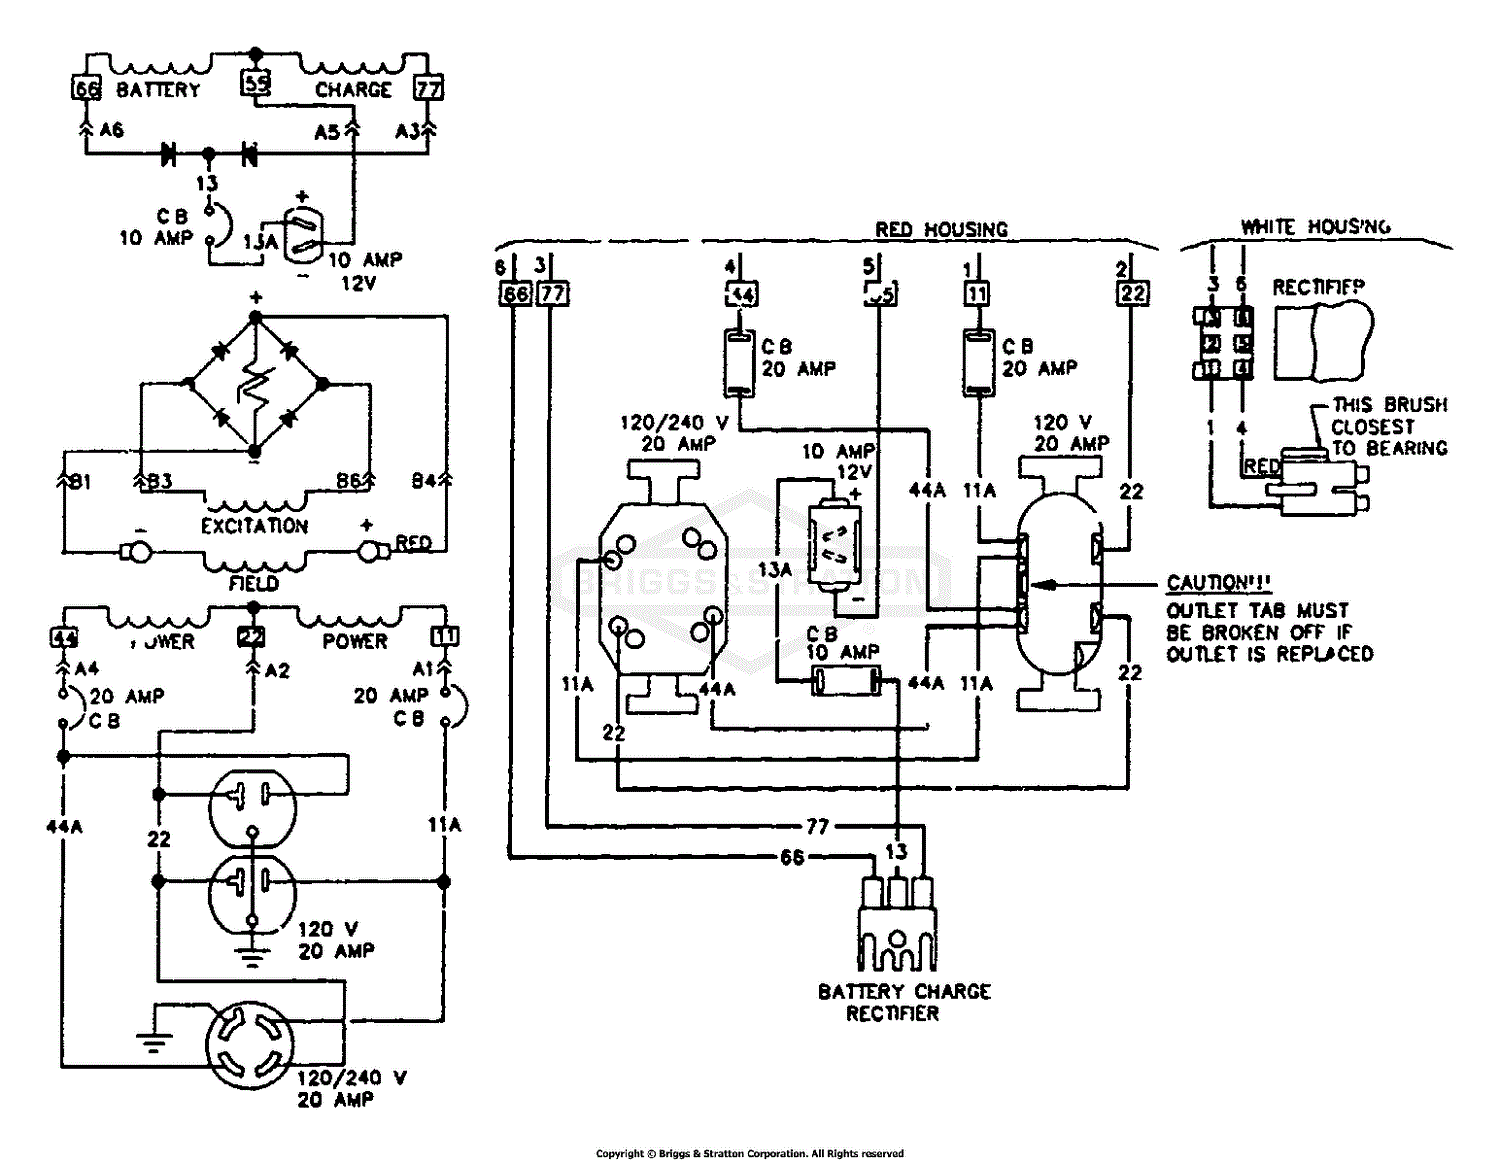 Amp Wiring Diagram 240 - Wiring Diagram Networks